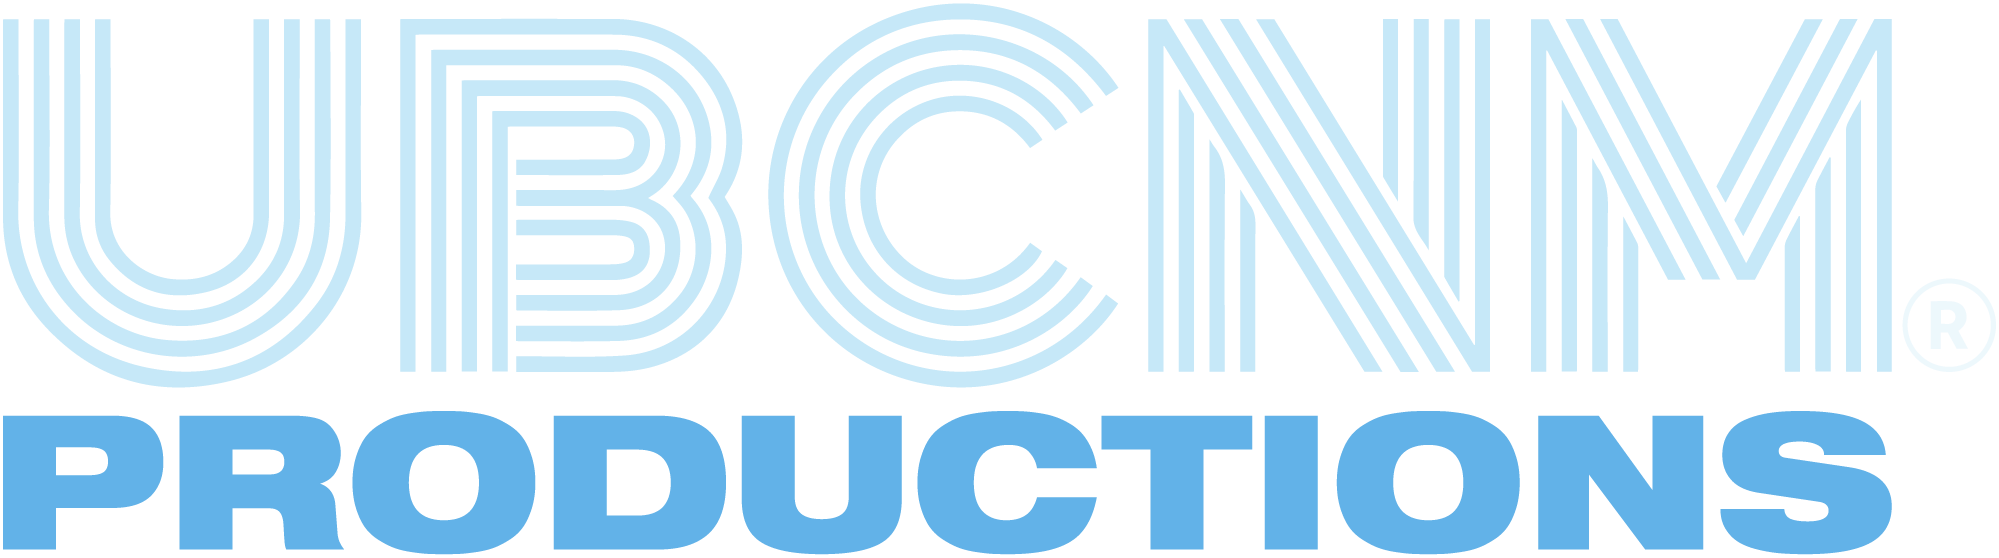 UBCNM Productions